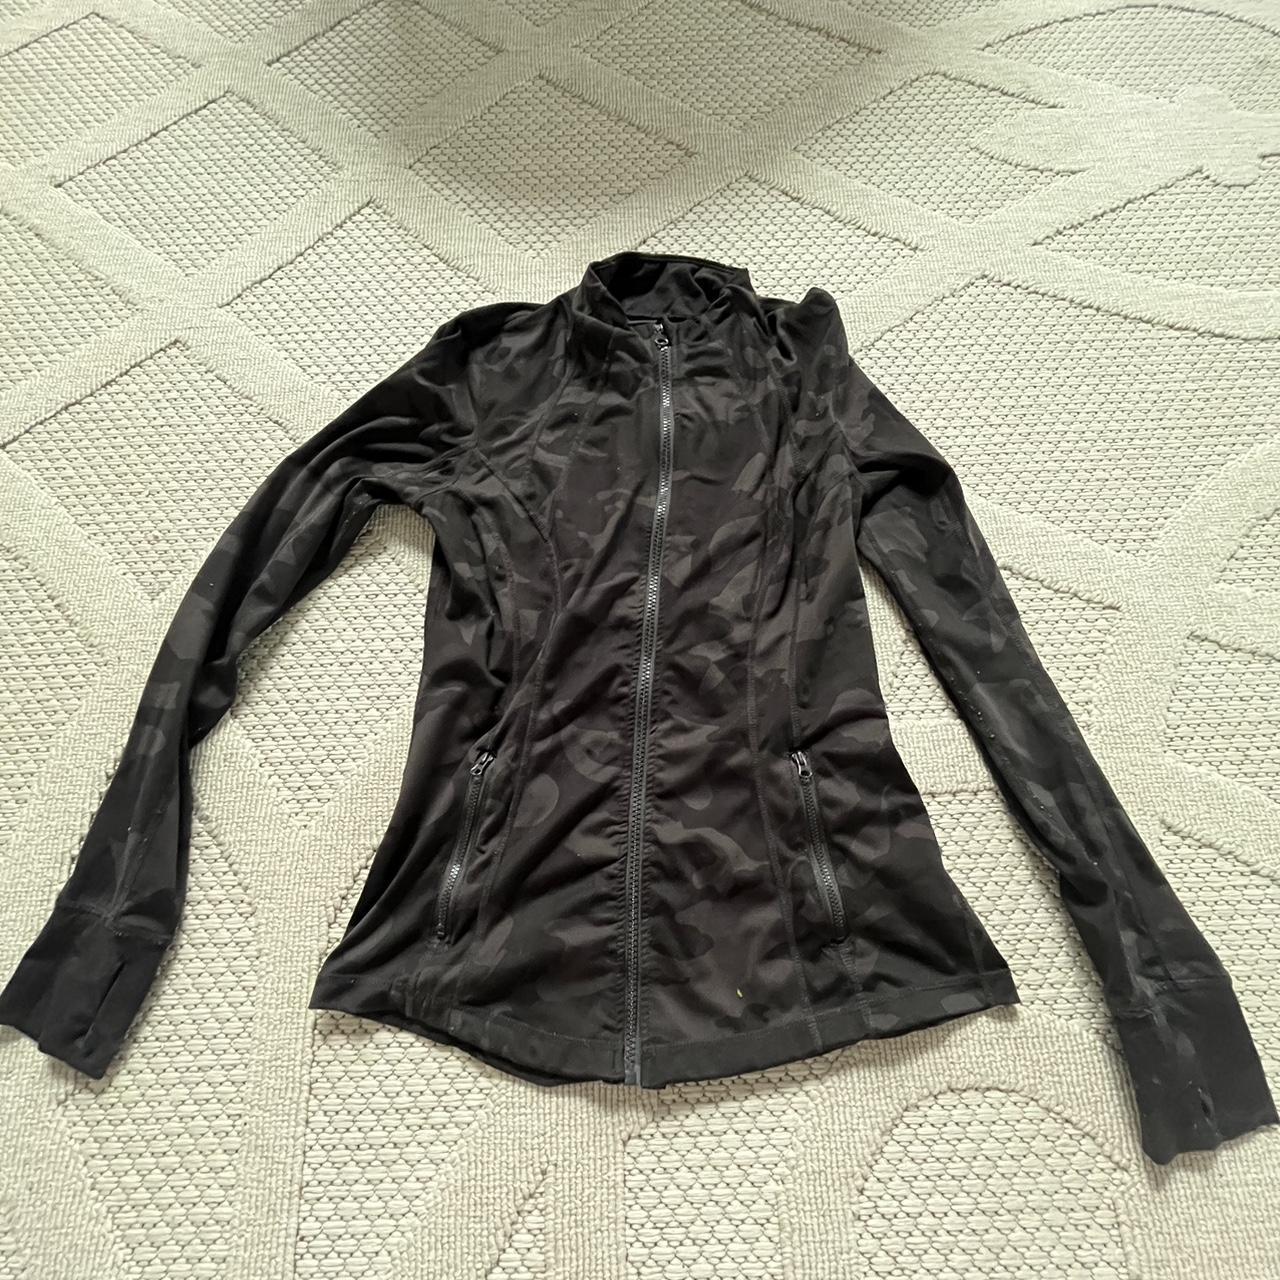 black camo define jacket size small but fits a... - Depop